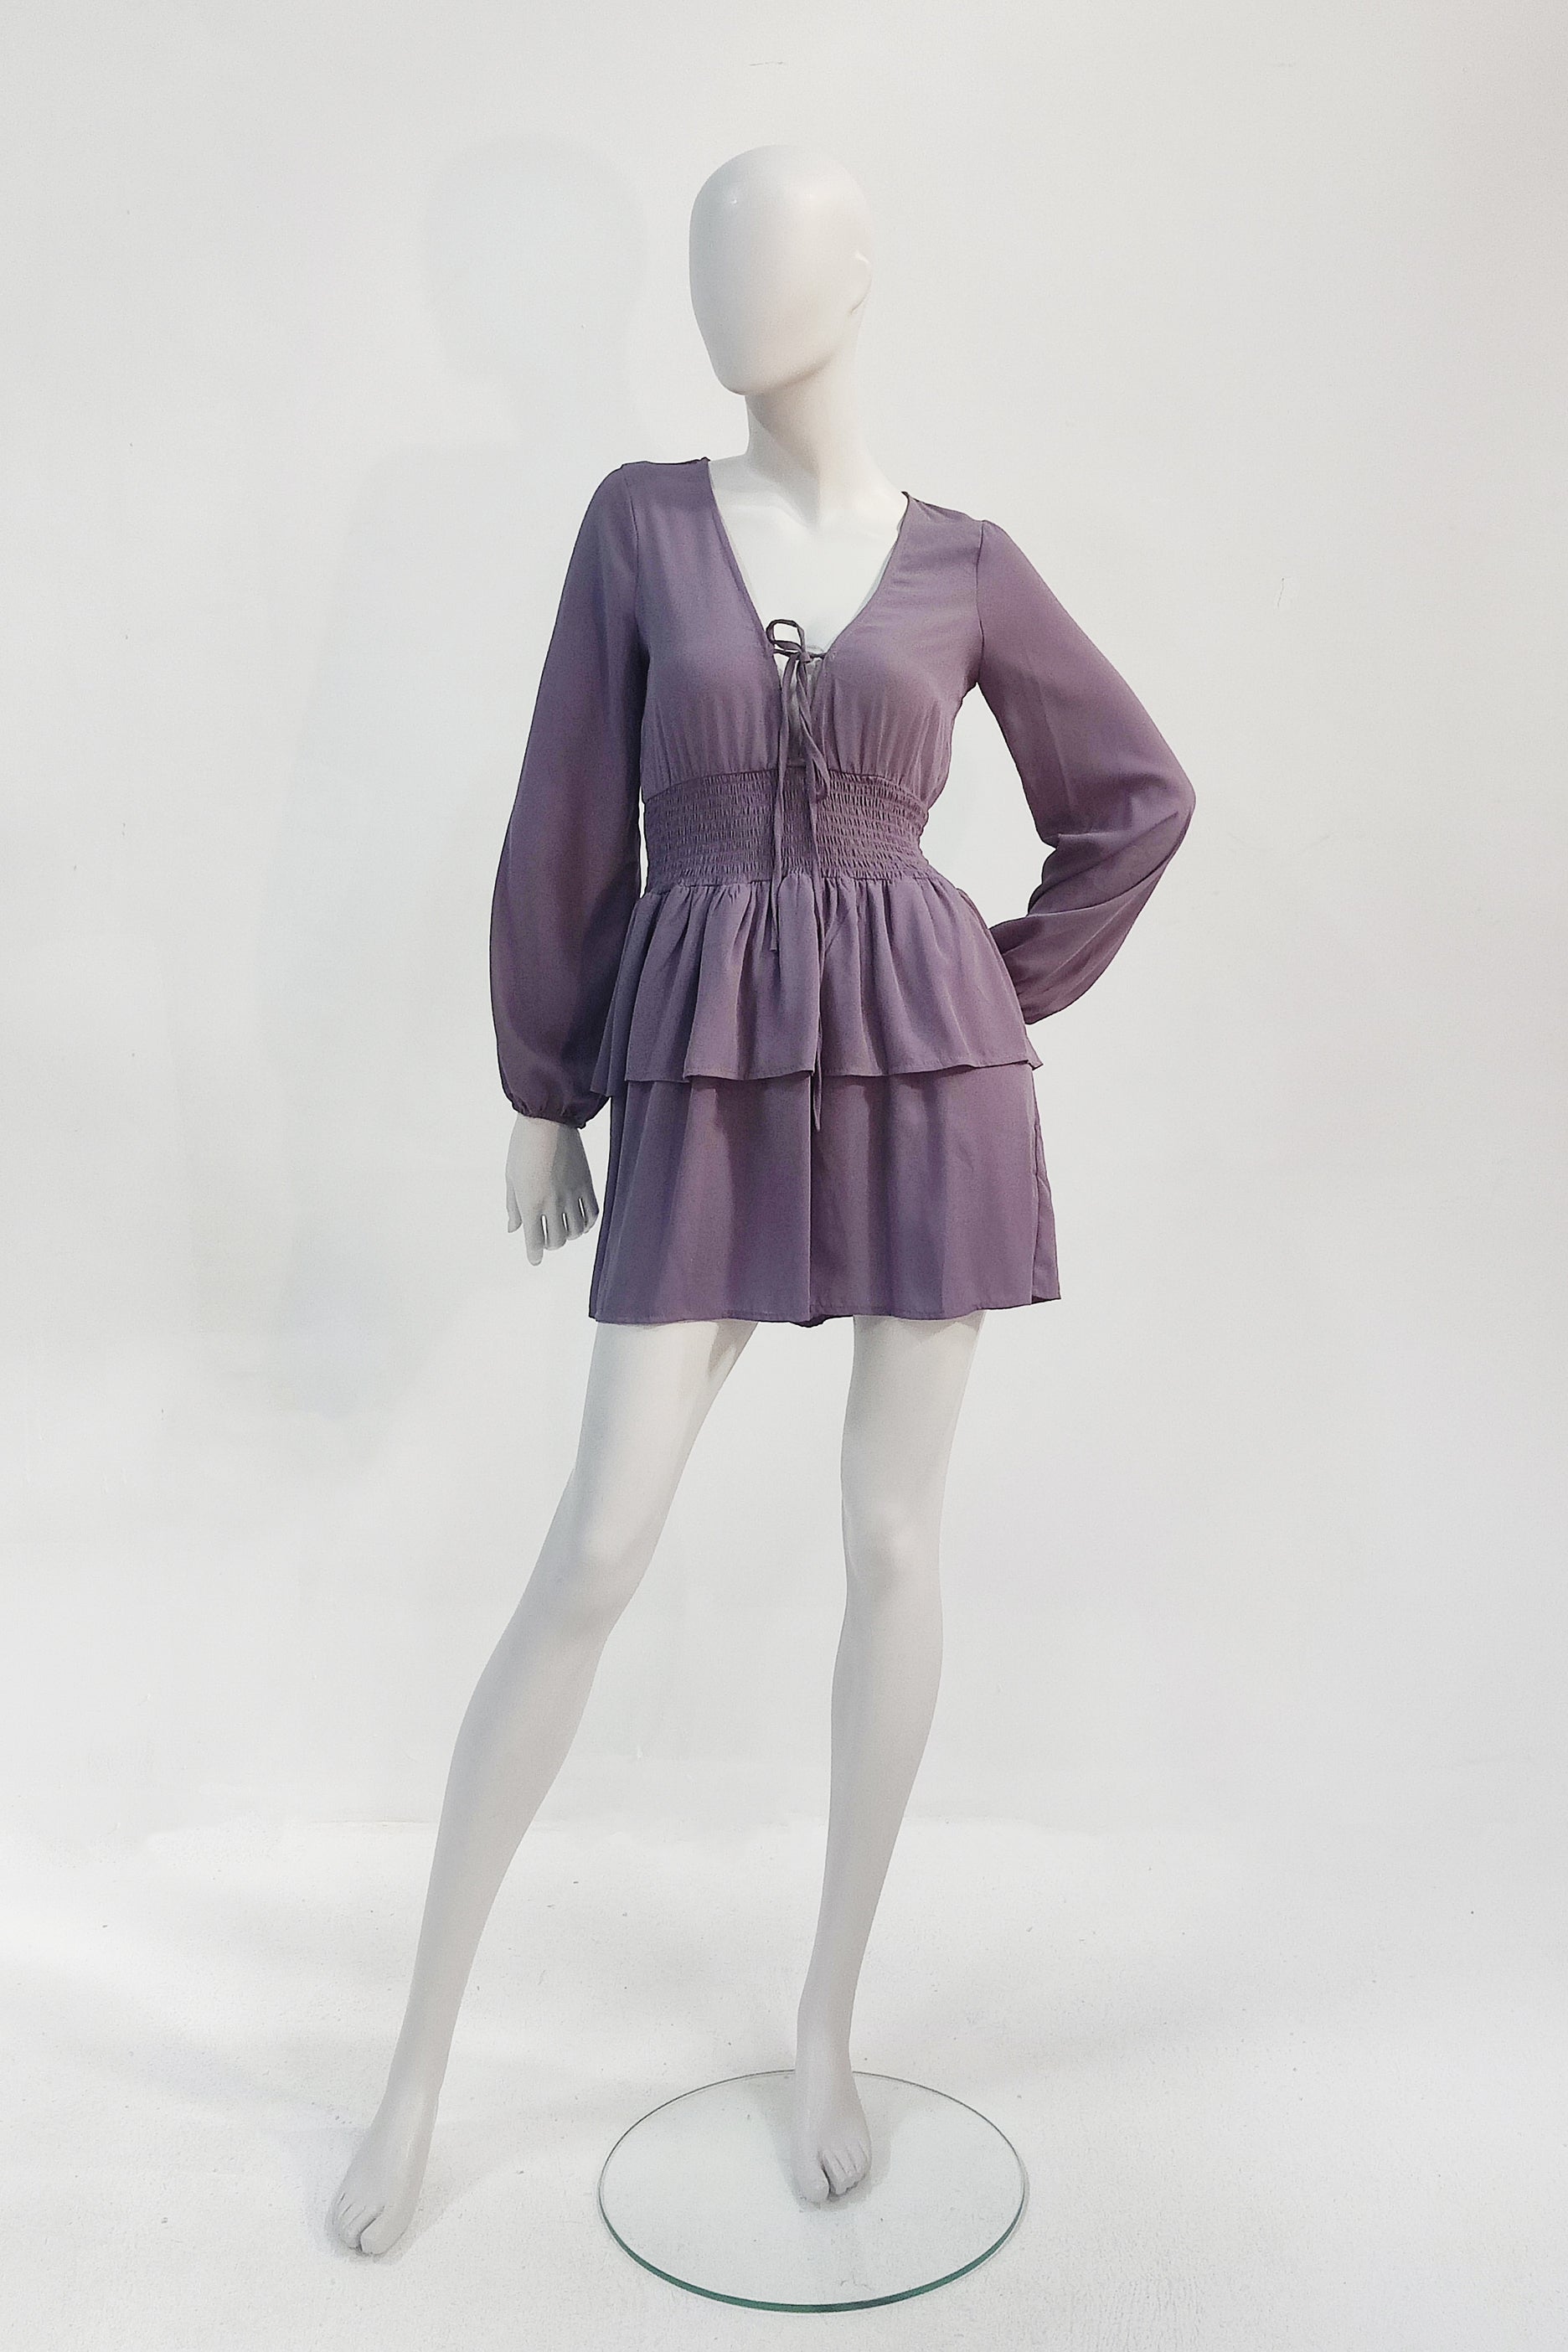 Short Purple Dress (small)